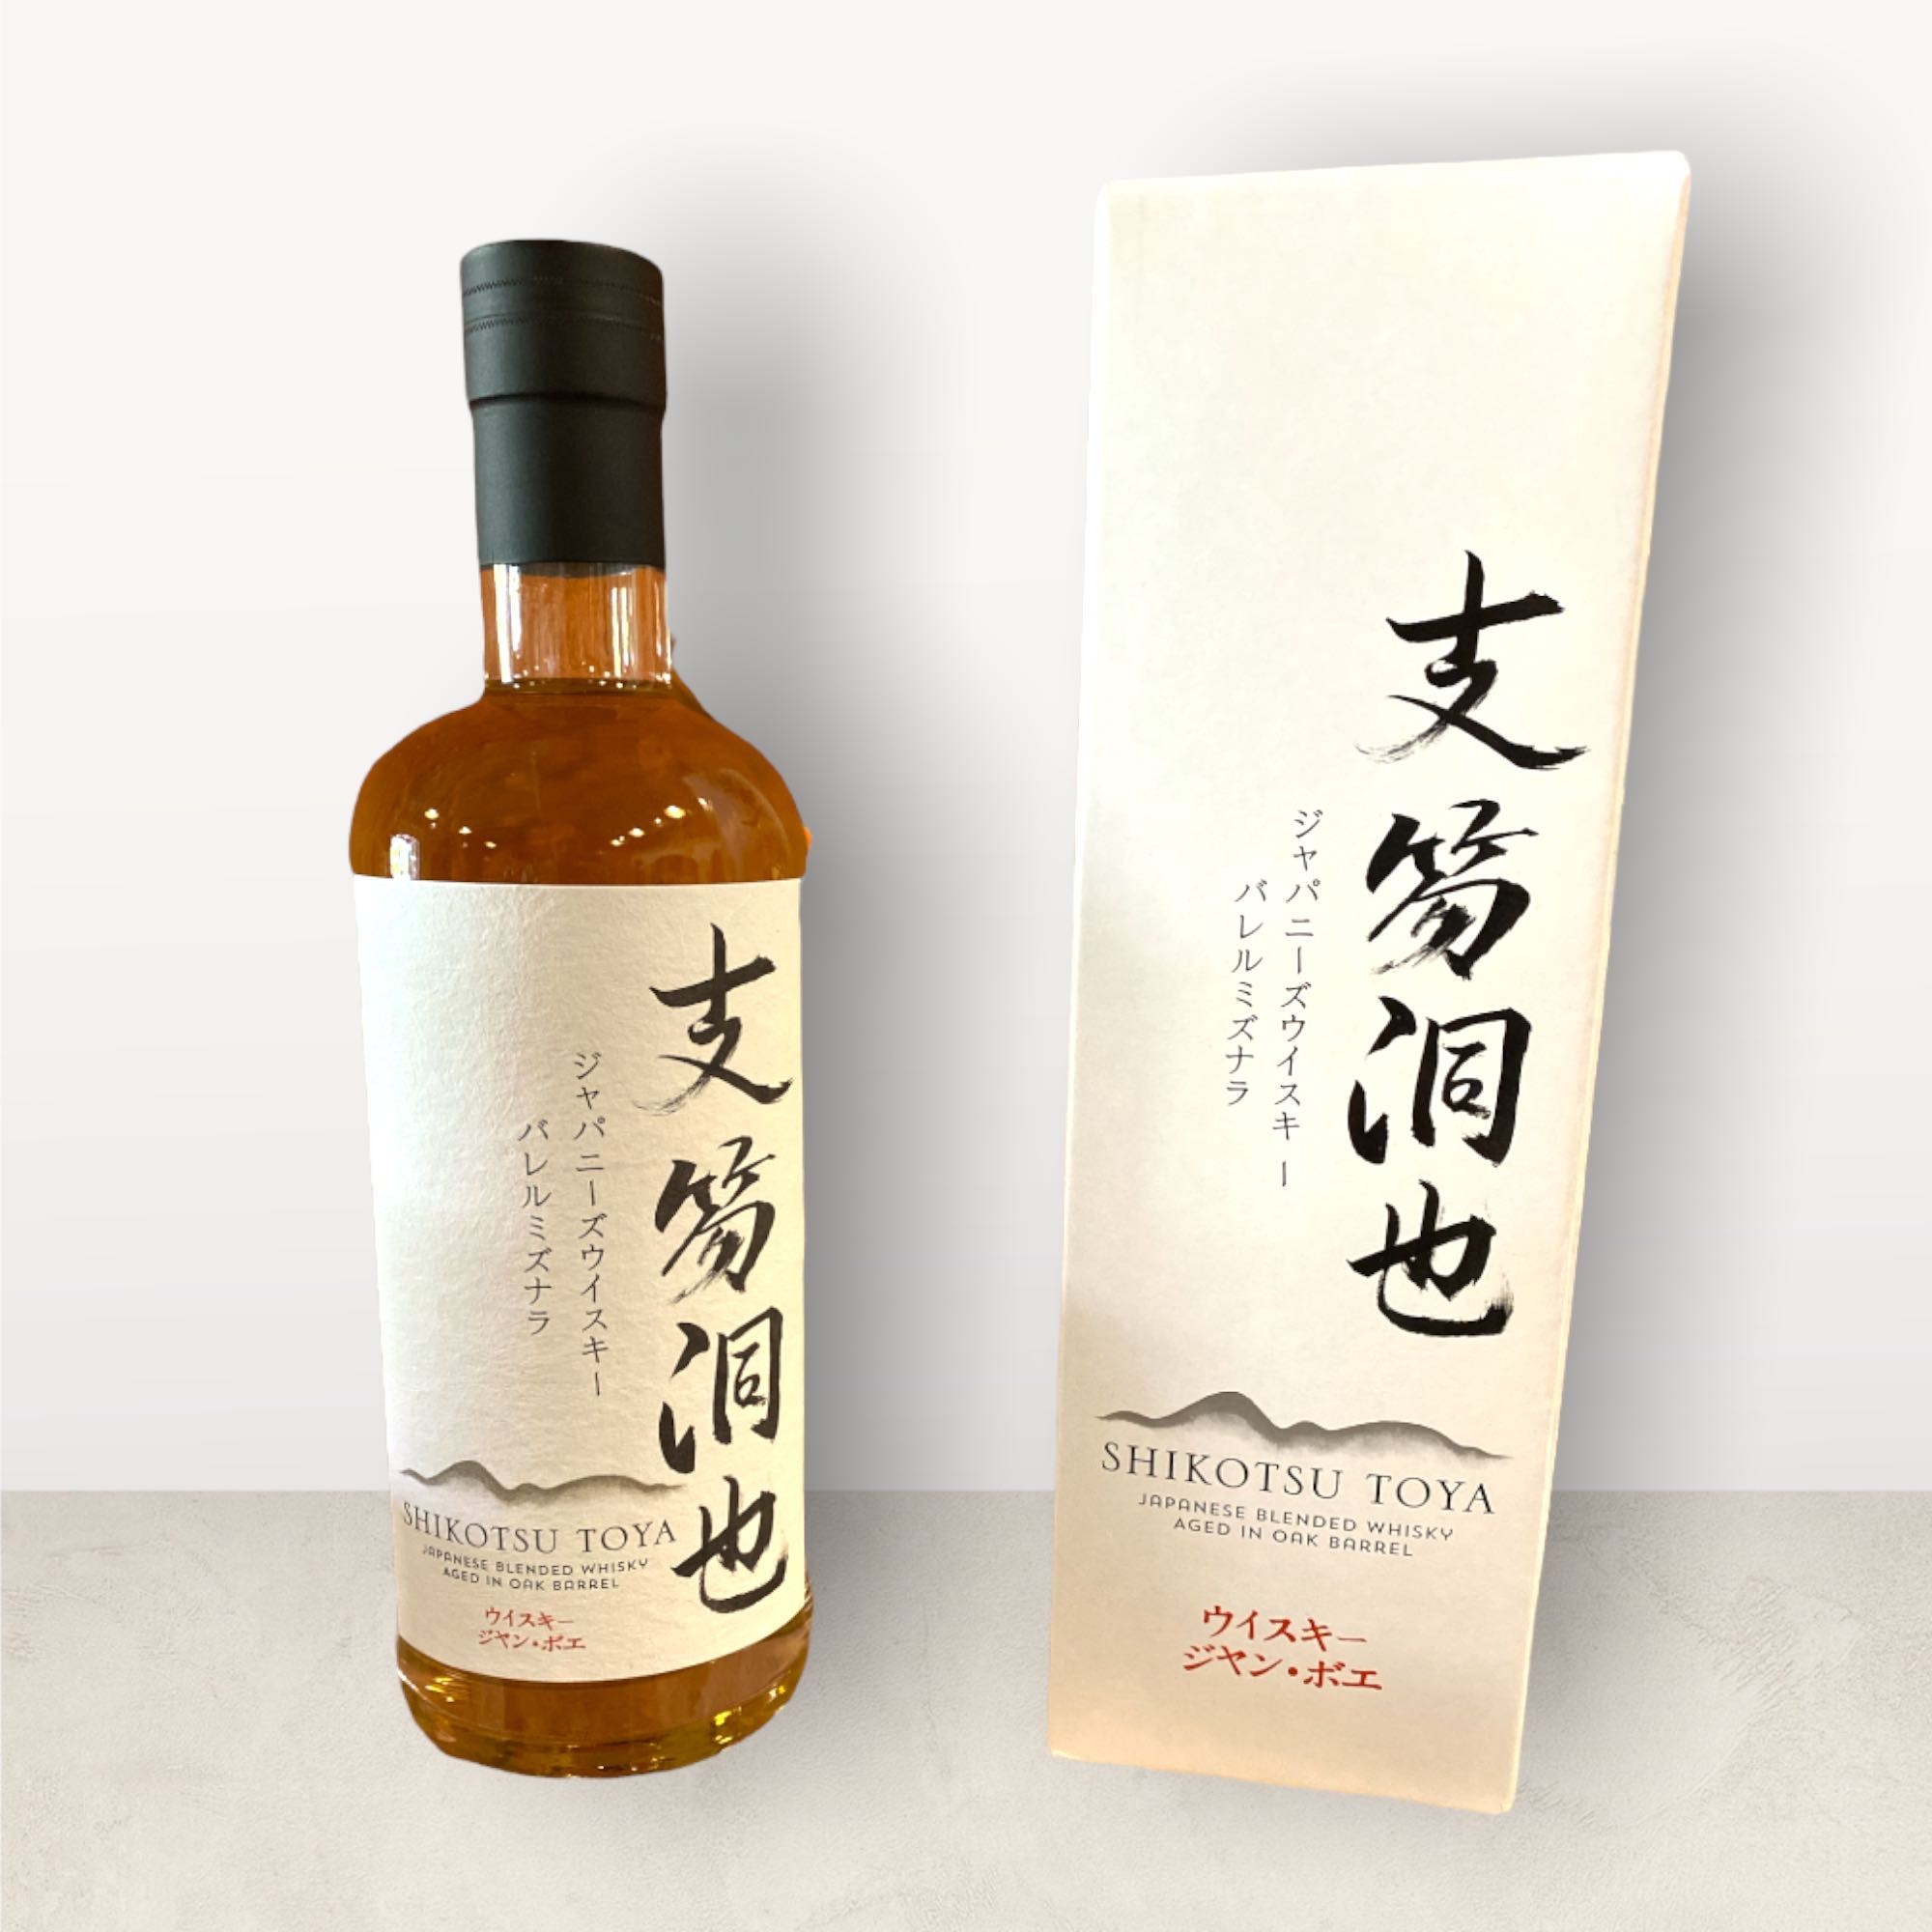 https://www.la-plate-forme.fr/14214/shikotsu-toya-whisky-japonais.jpg